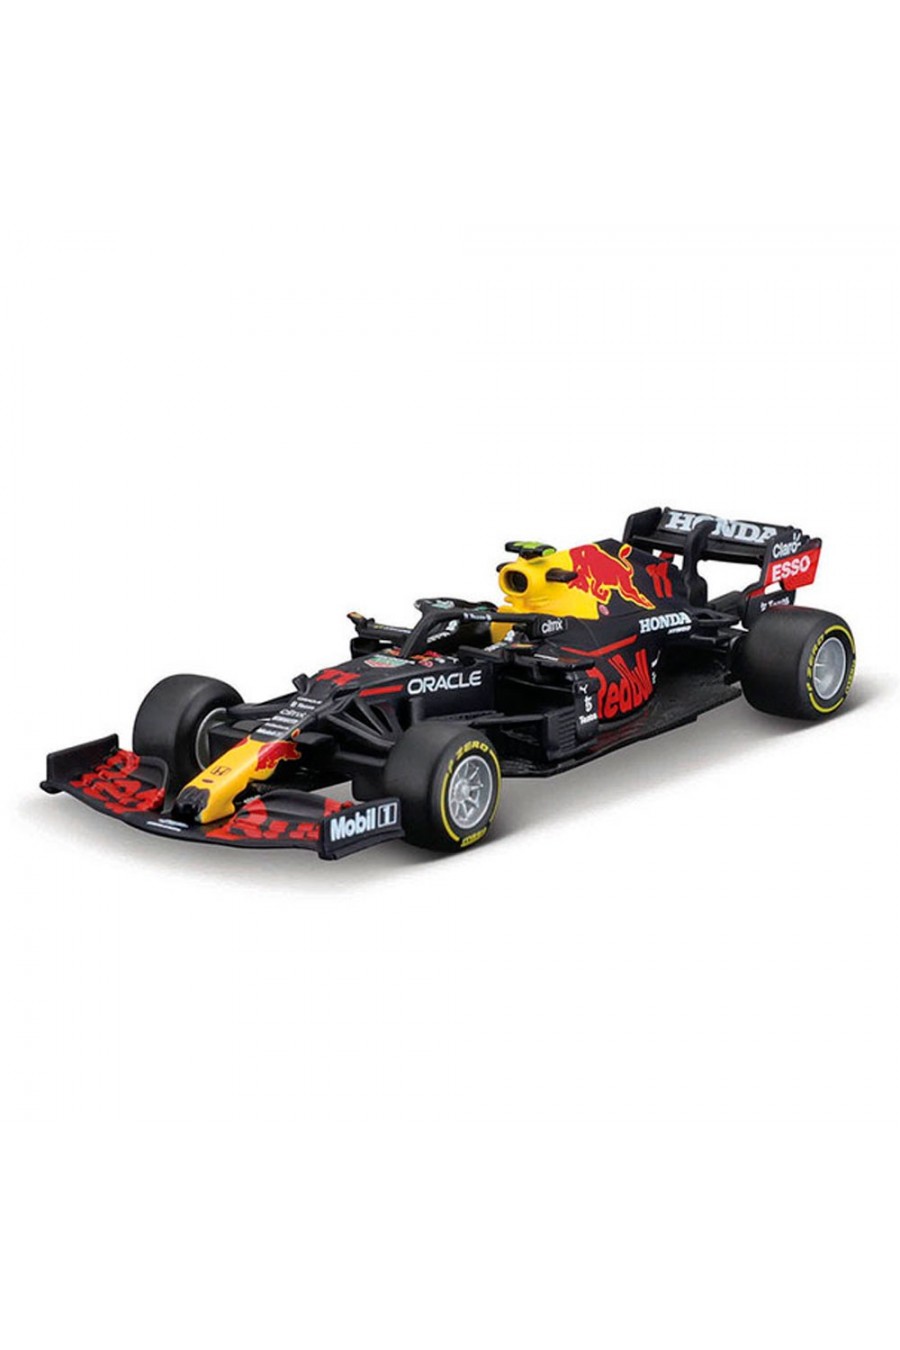 Casquette Classic Red Bull Racing F1 Team, Vêtements \ Casquettes Équipes  \ Équipes de Formule 1 \ Red Bull